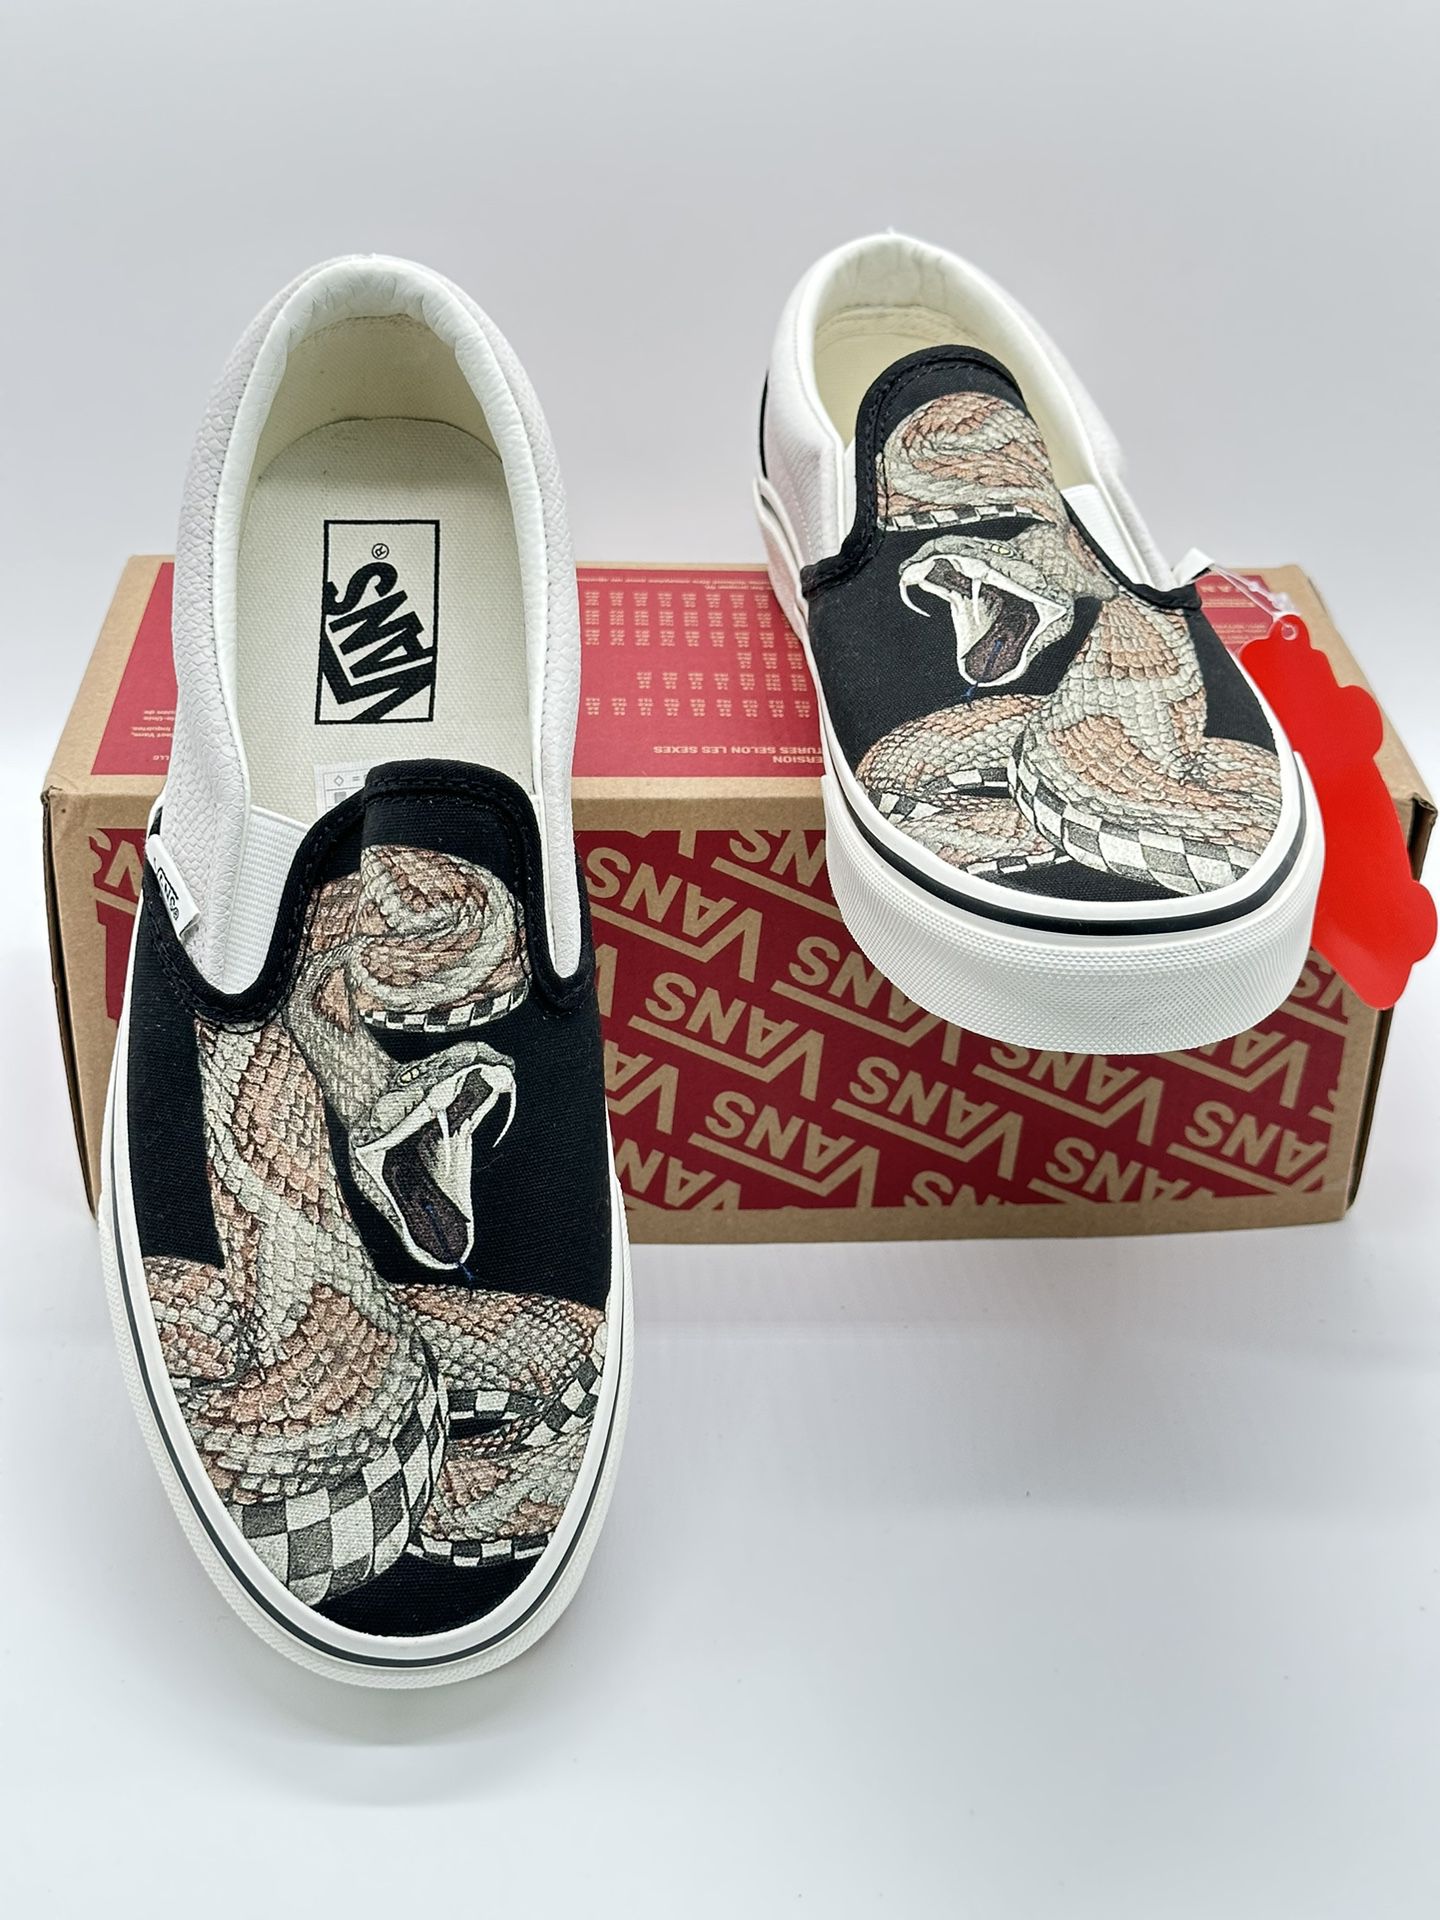 Apt Susteen Seizoen Vans Classic Slip -on Desert Snake Sneaker Shoes Sz 8.5 Mens New for Sale  in Chino, CA - OfferUp